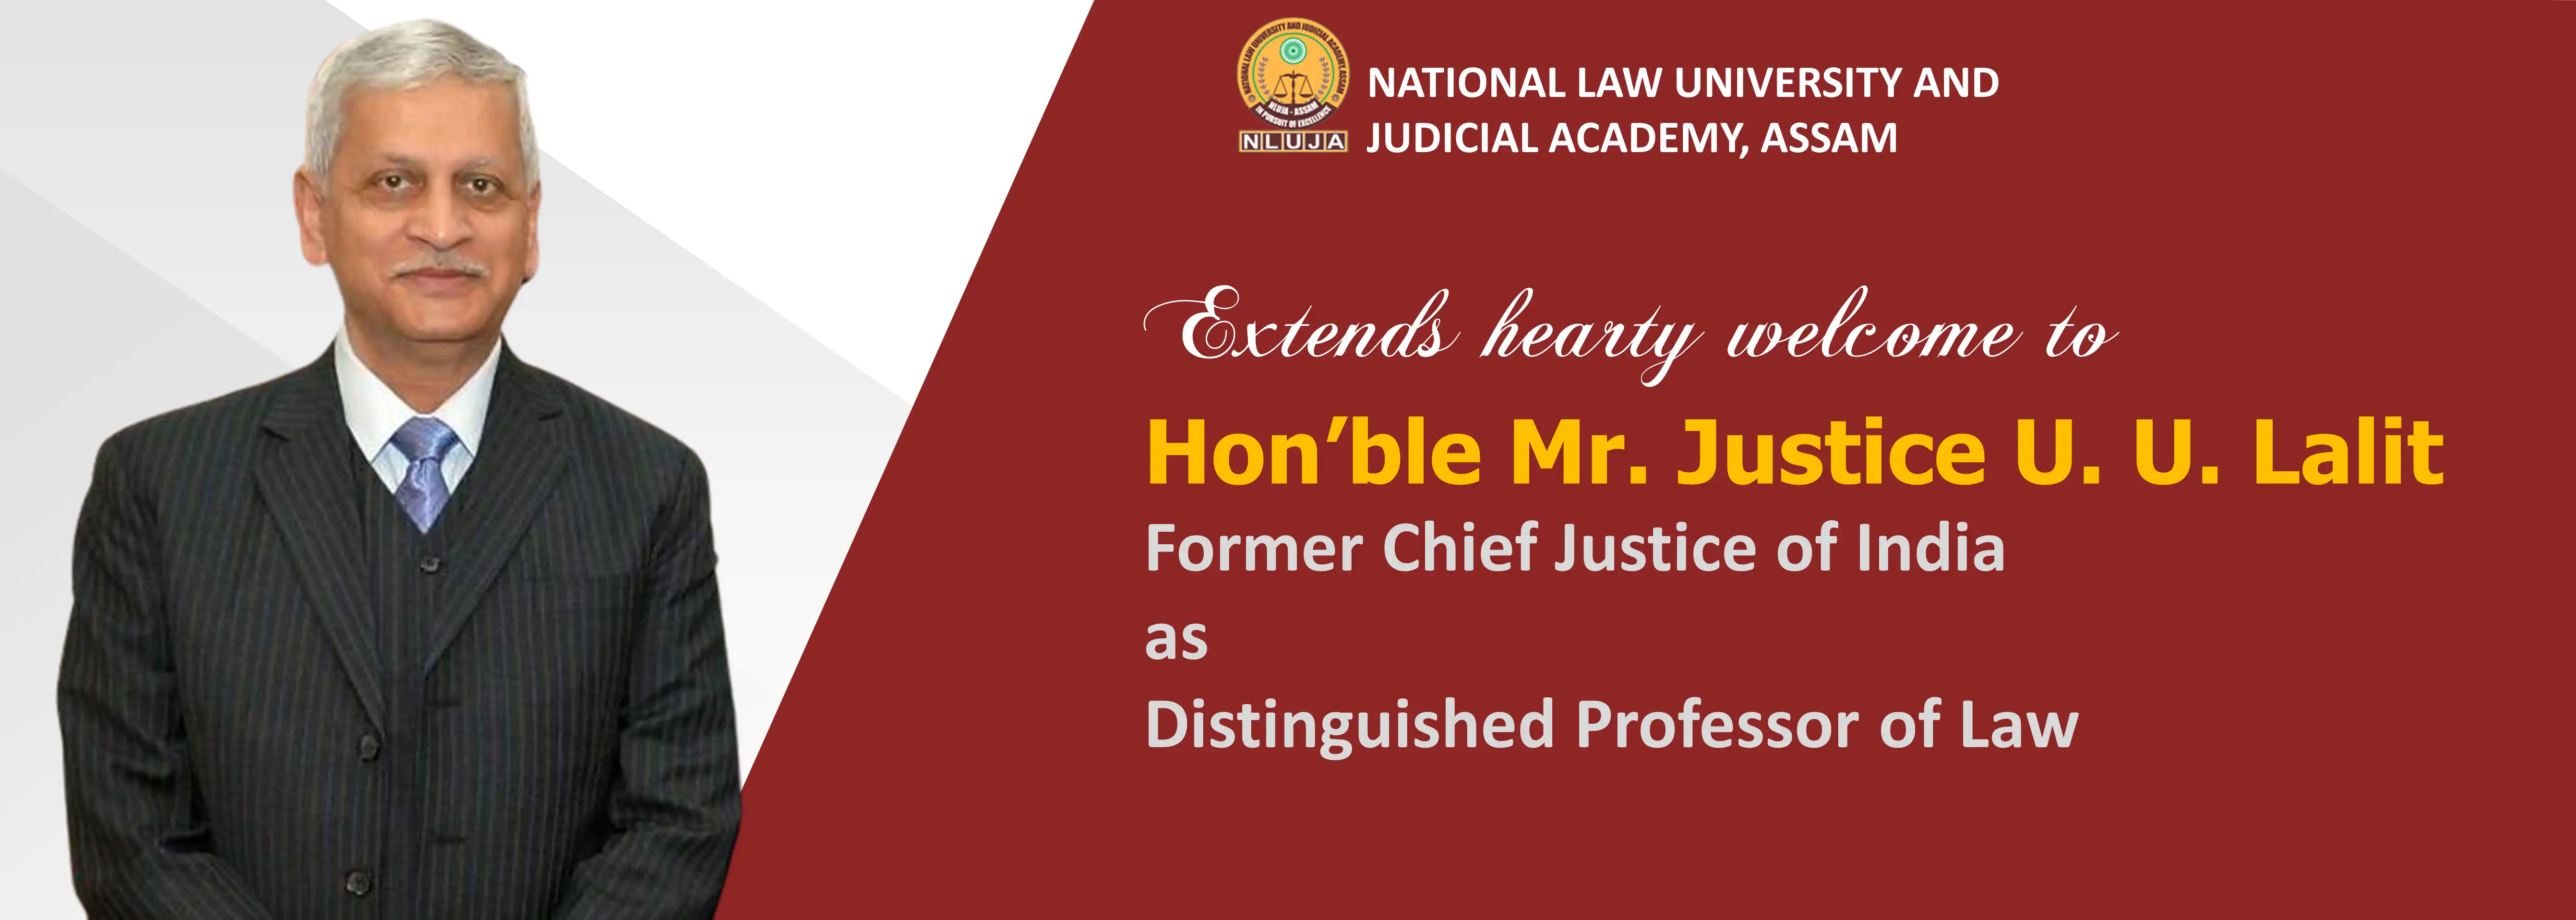 Mr. Justice U. U. Lalit Welcome banner